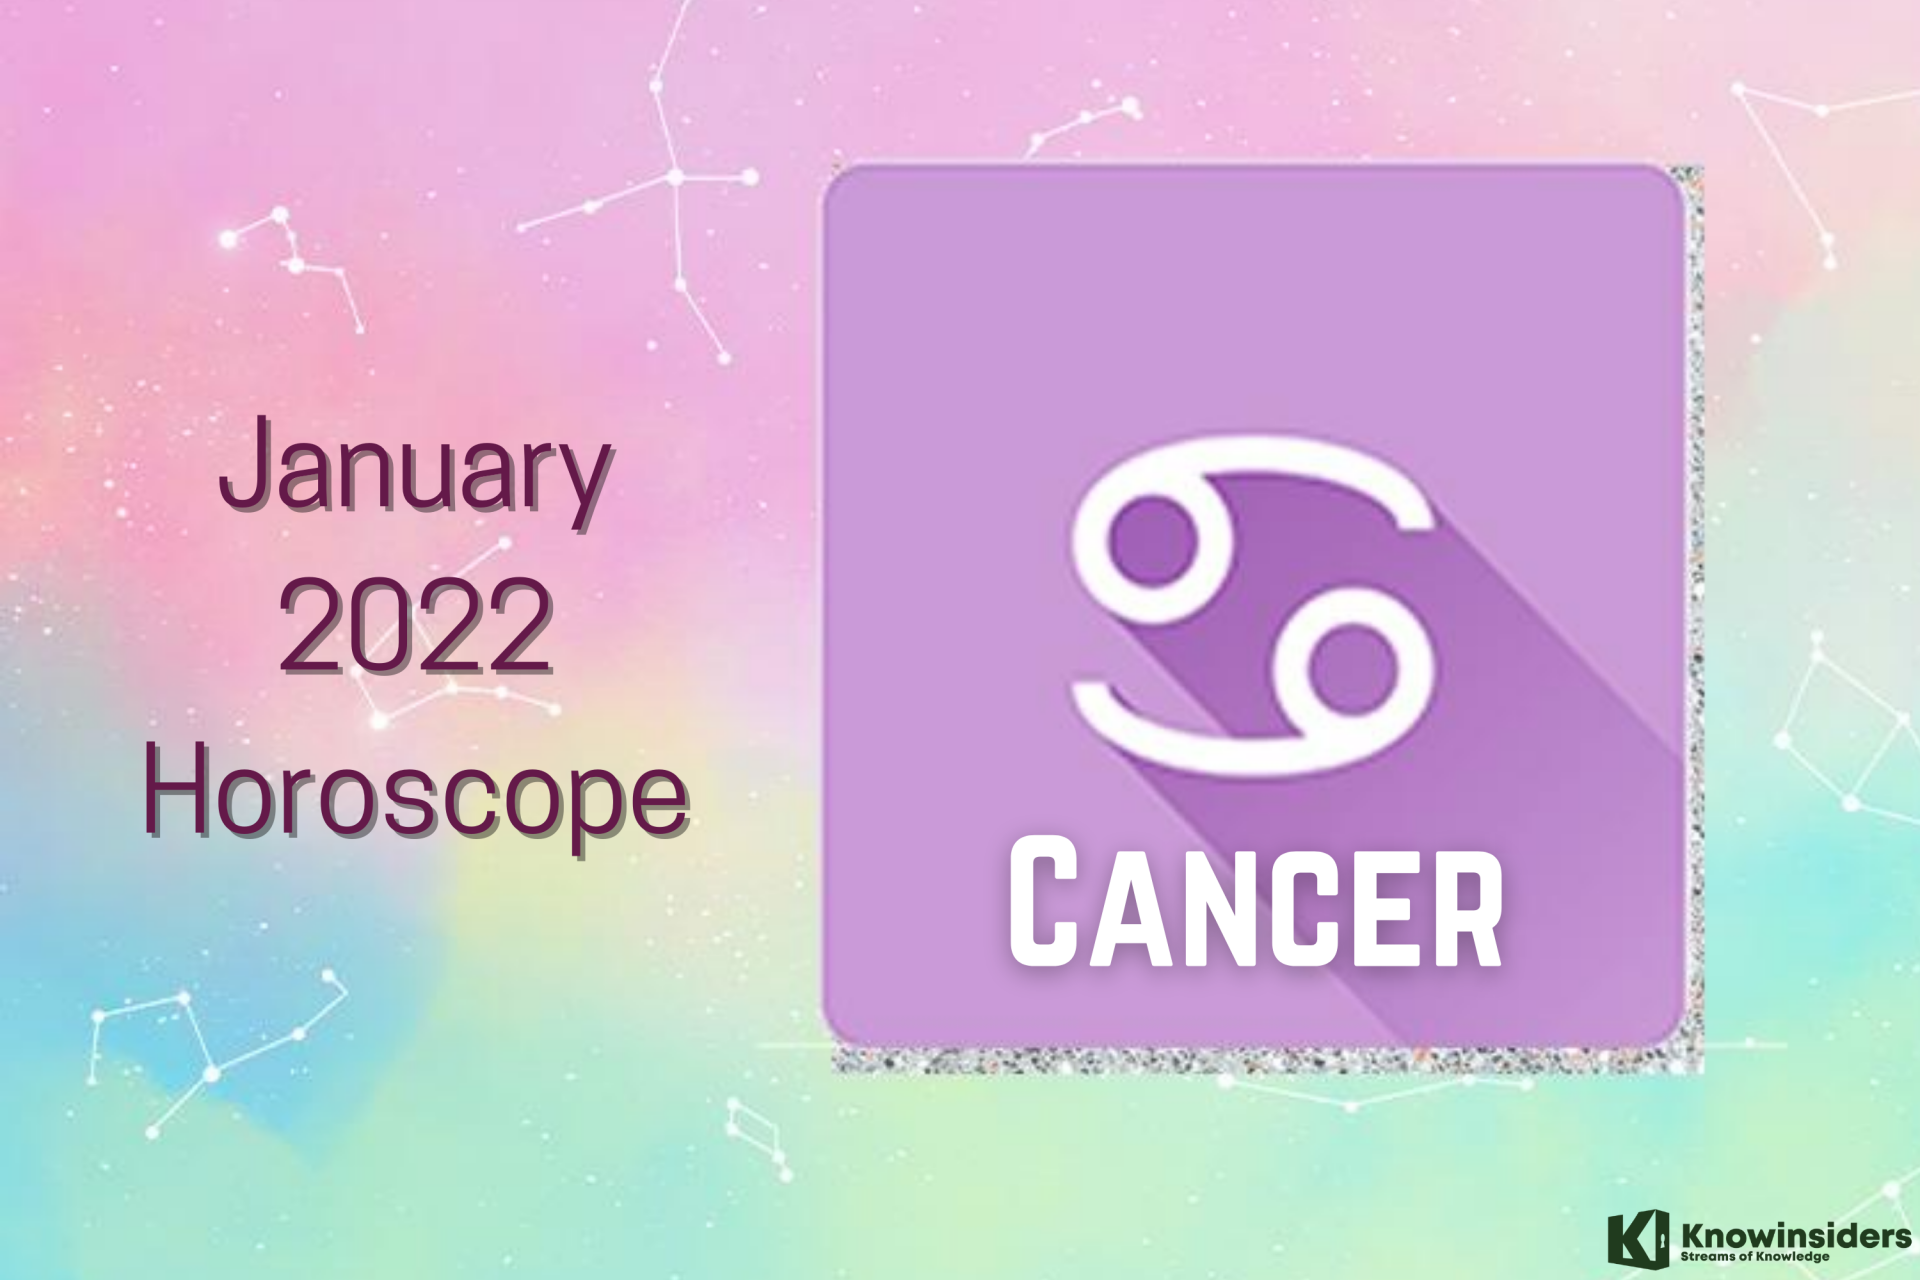 CANCER January 2022 Horoscope: Prediction for Love, Career, Money